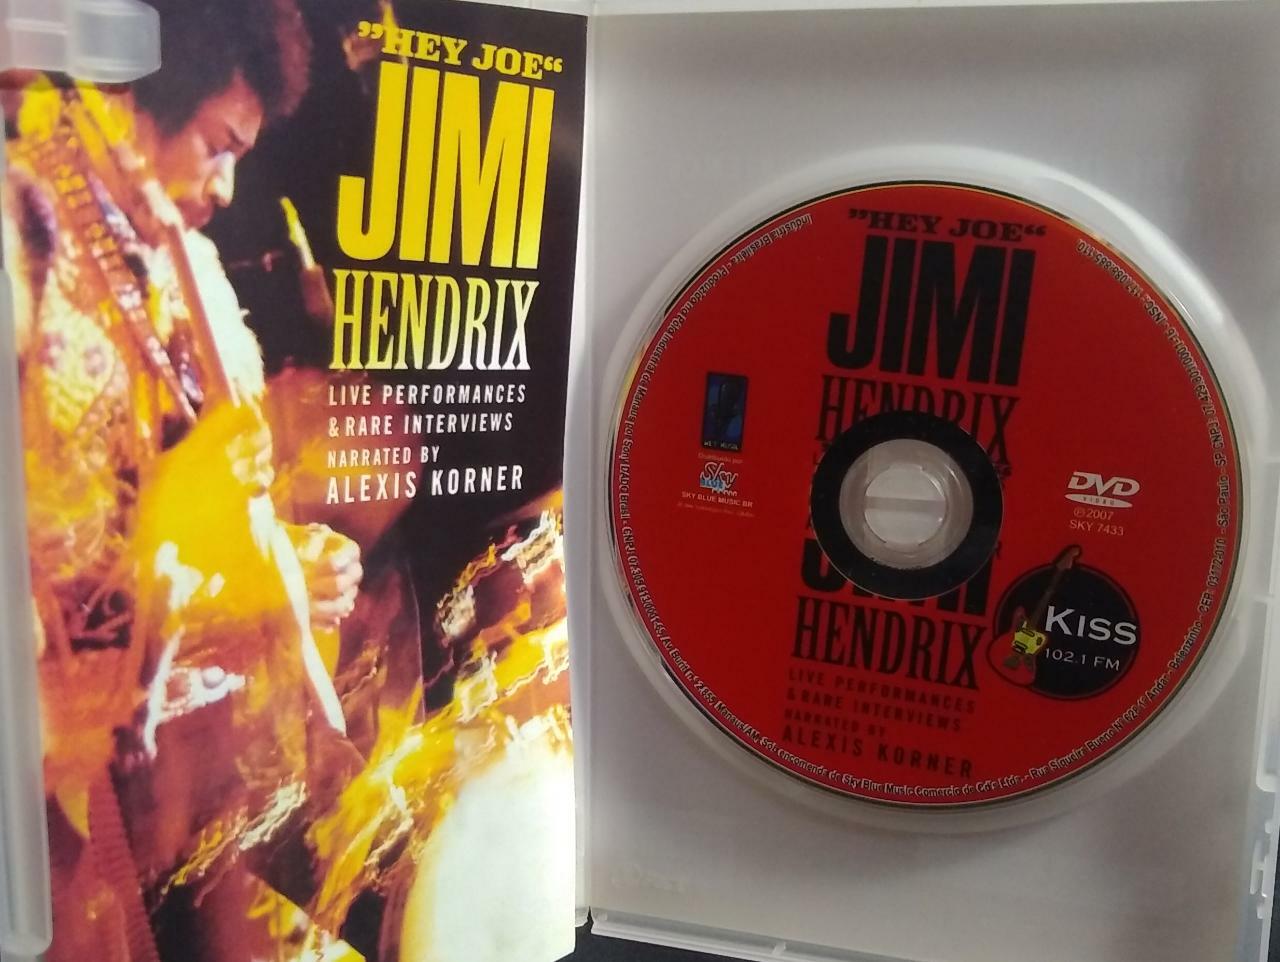 DVD - Jimi Hendrix - Hey Joe Live Performances and Rare Interviews